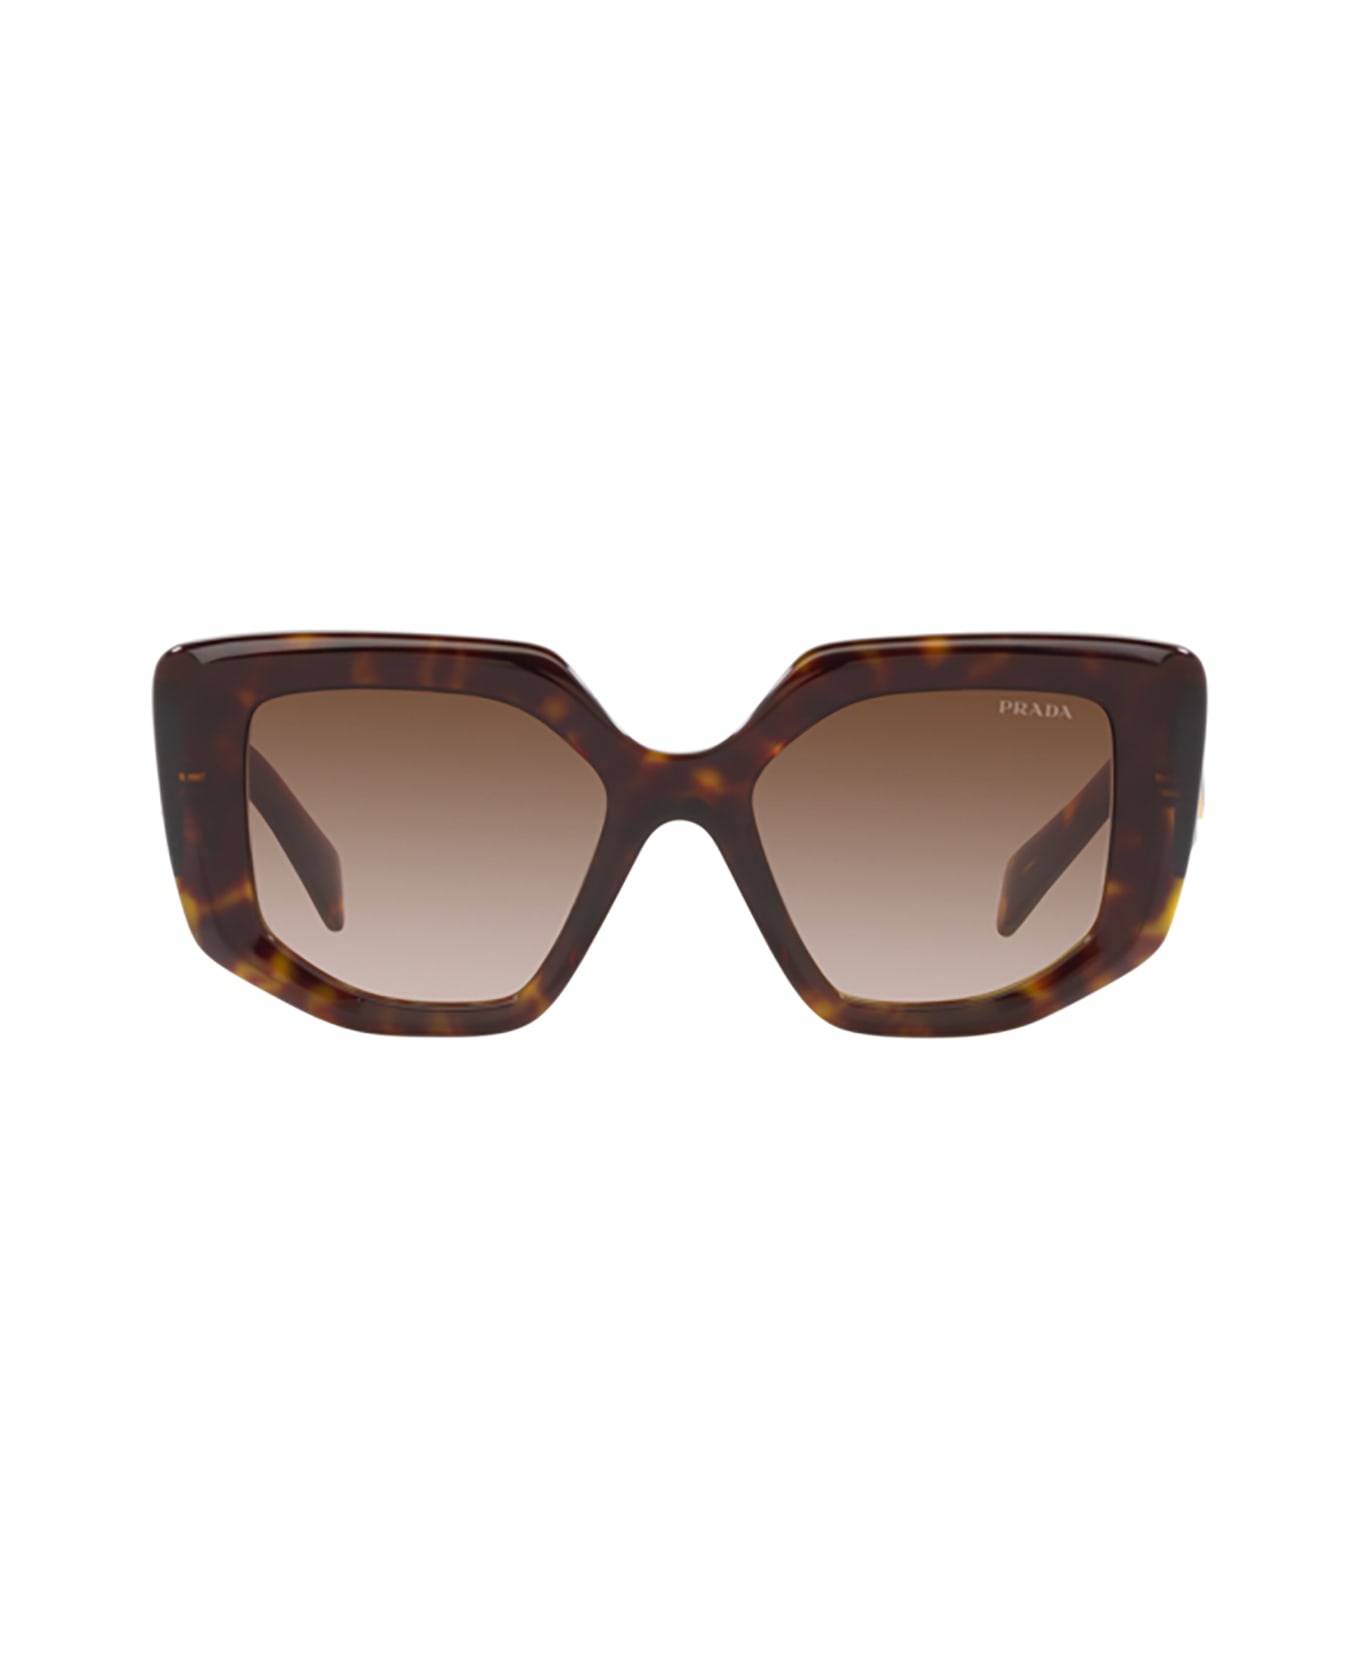 Prada Eyewear Pr 14zs Tortoise Sunglasses - Tortoise